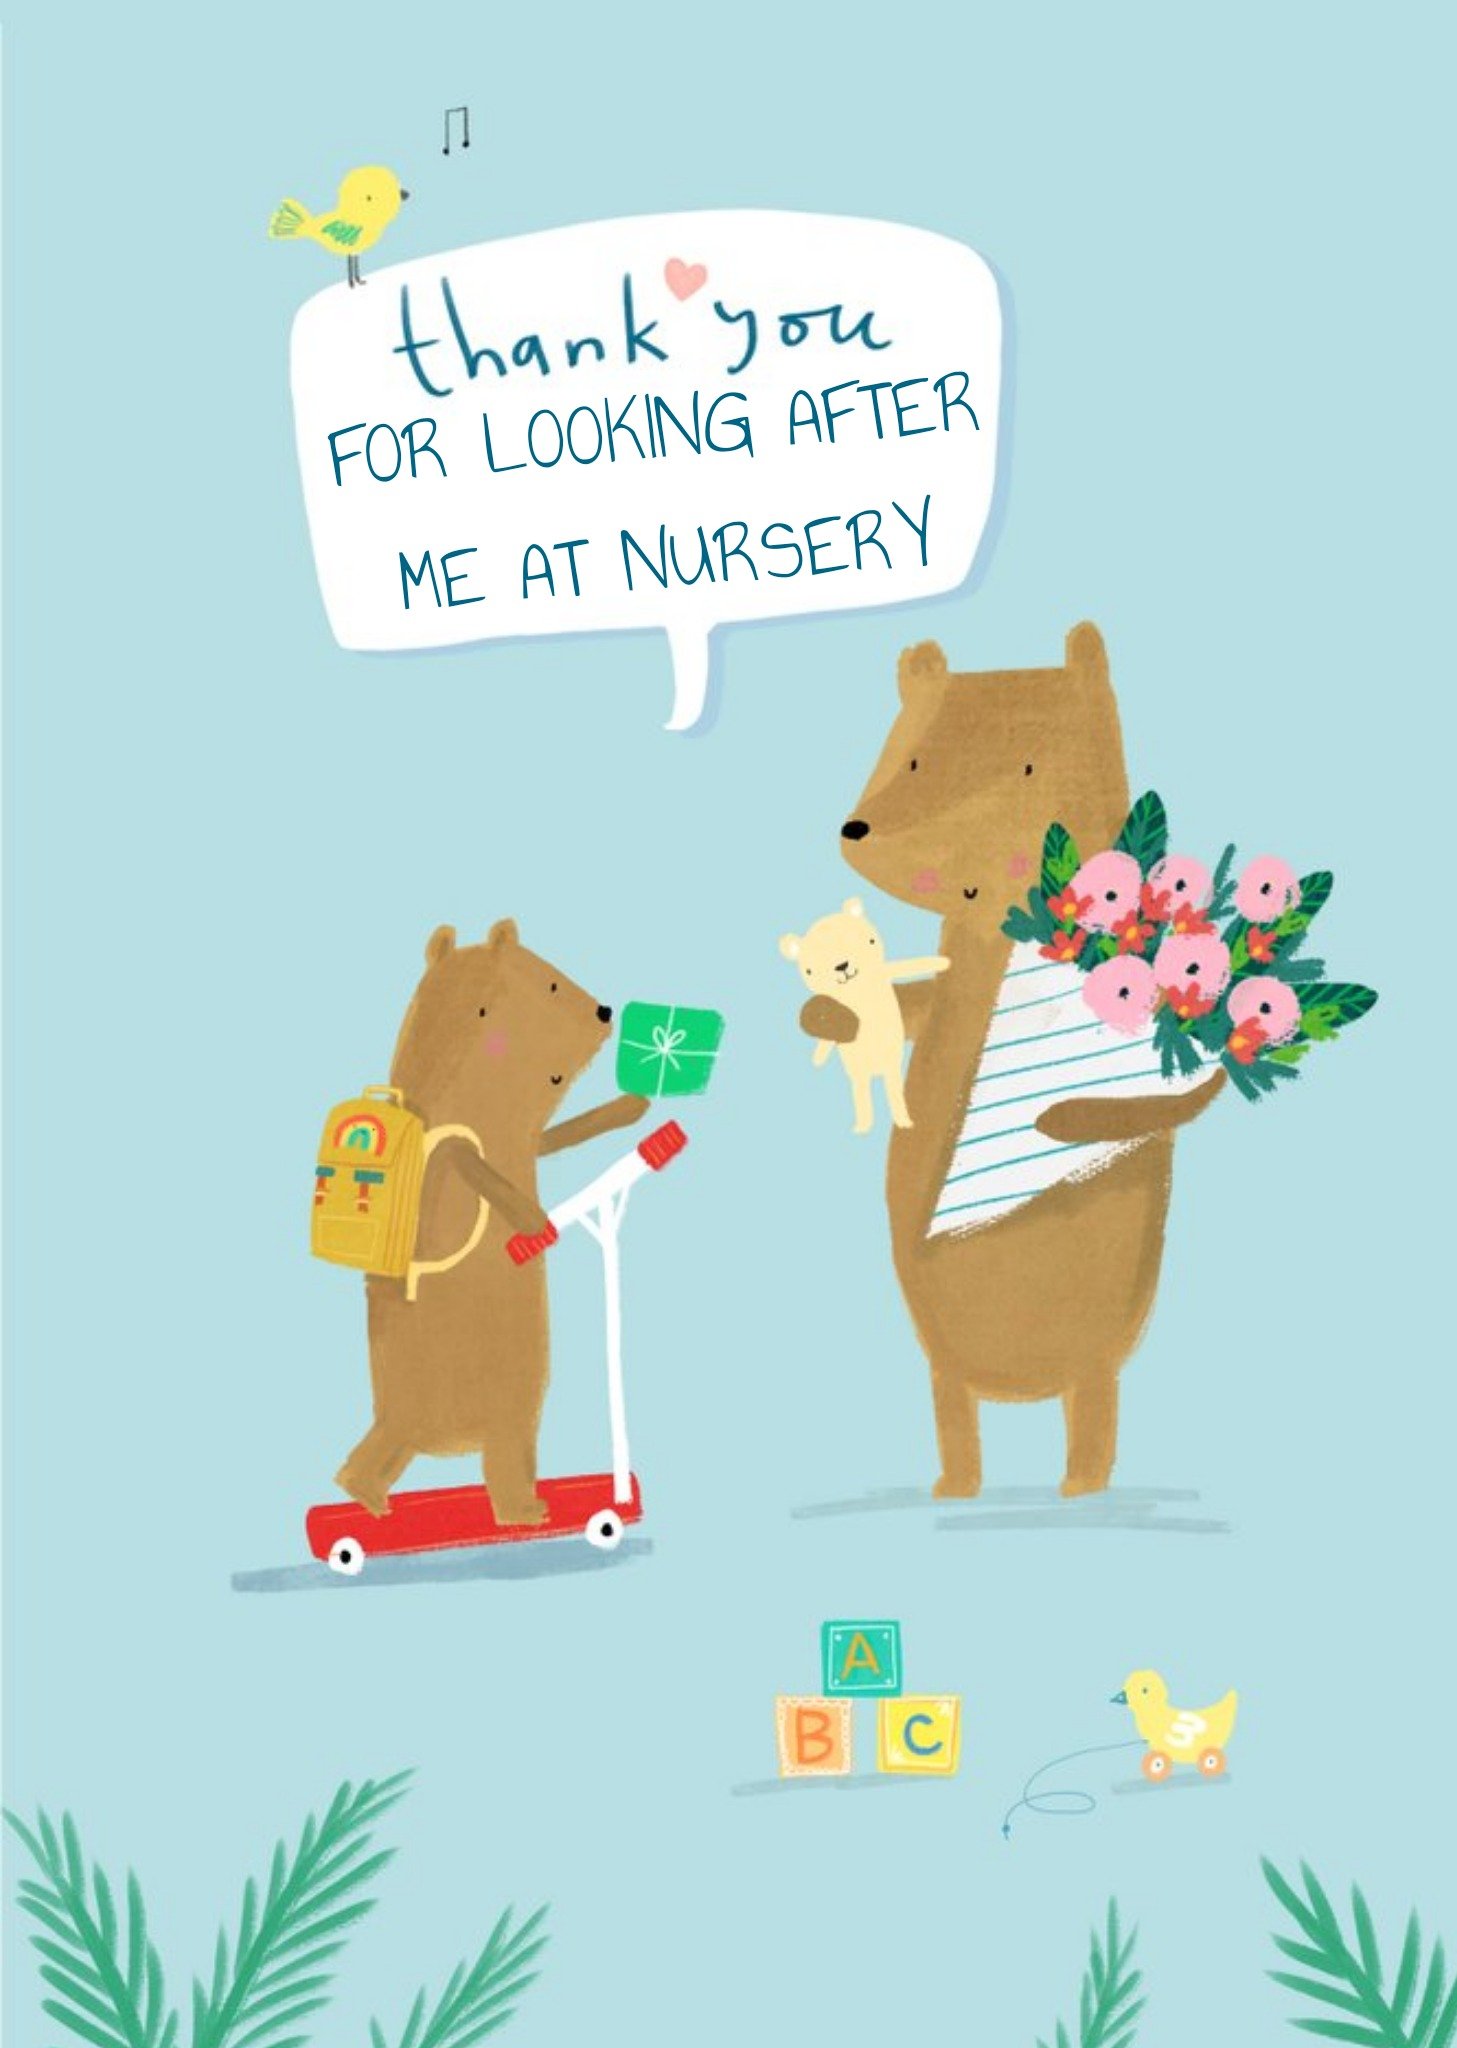 Moonpig Colette Barker Bears Nursey Gift Thank You Card Ecard